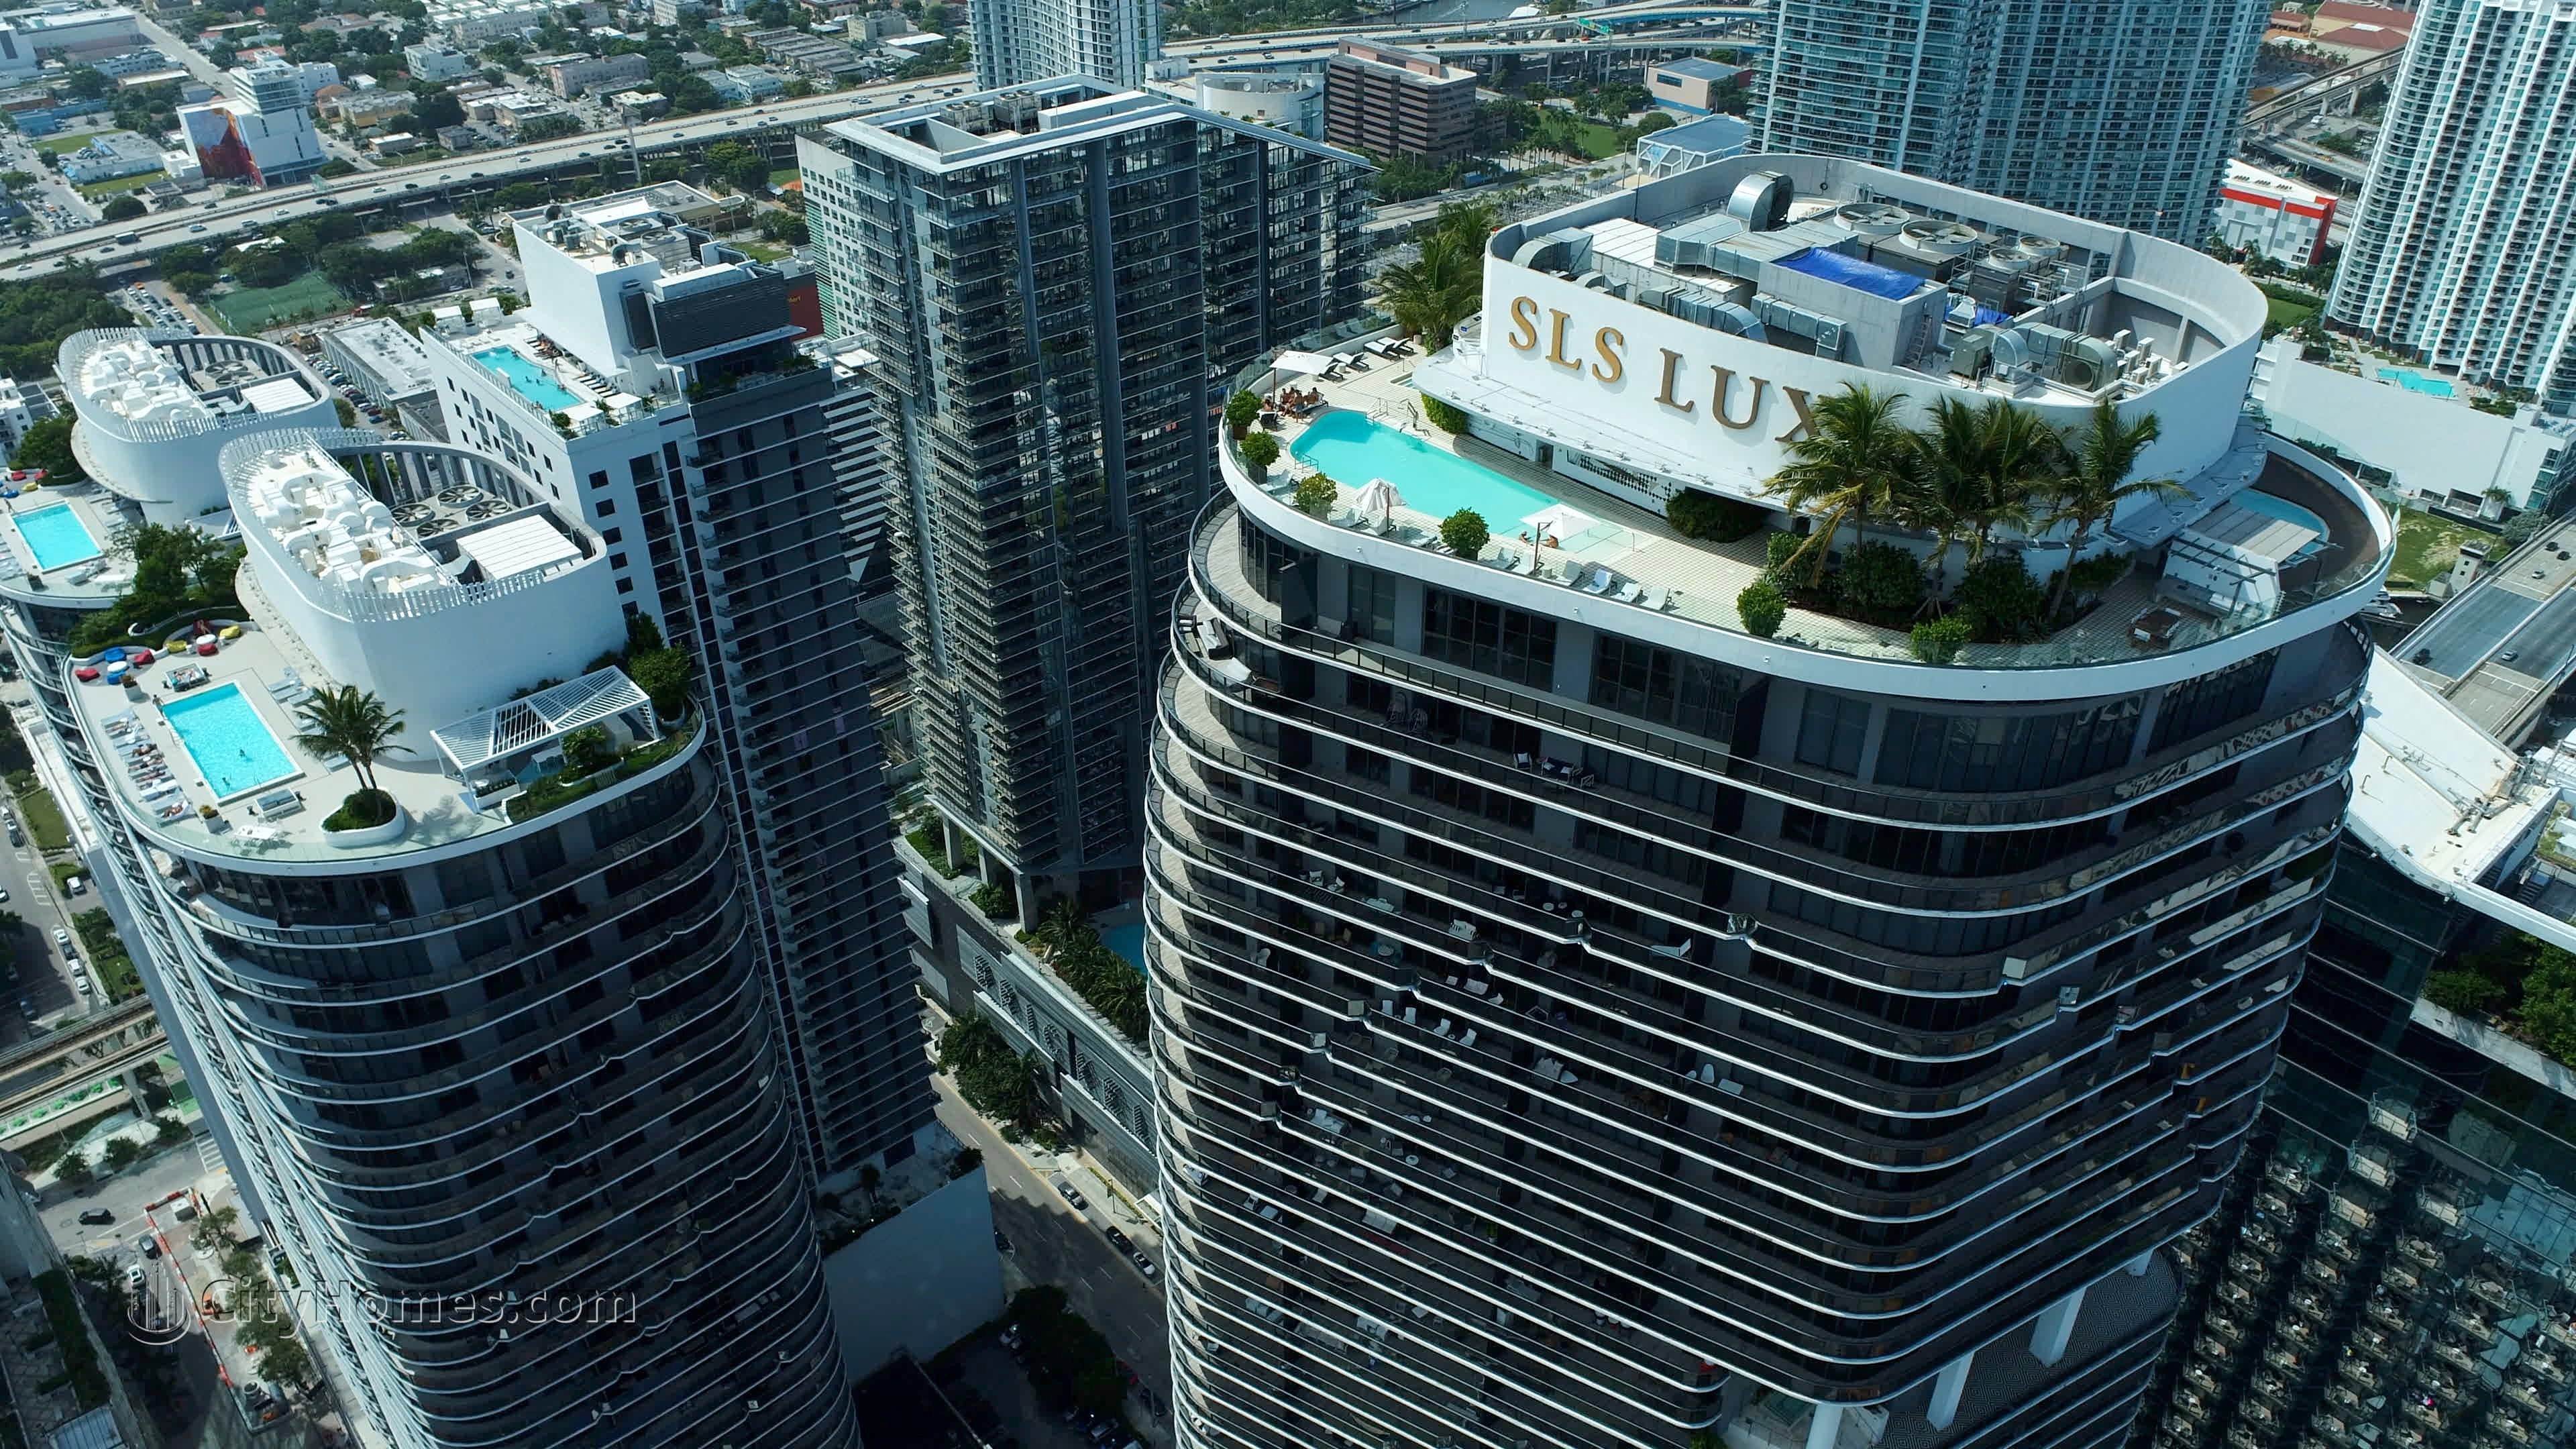 3. SLS Lux gebouw op 801 S Miami Avenue, Miami, FL 33139